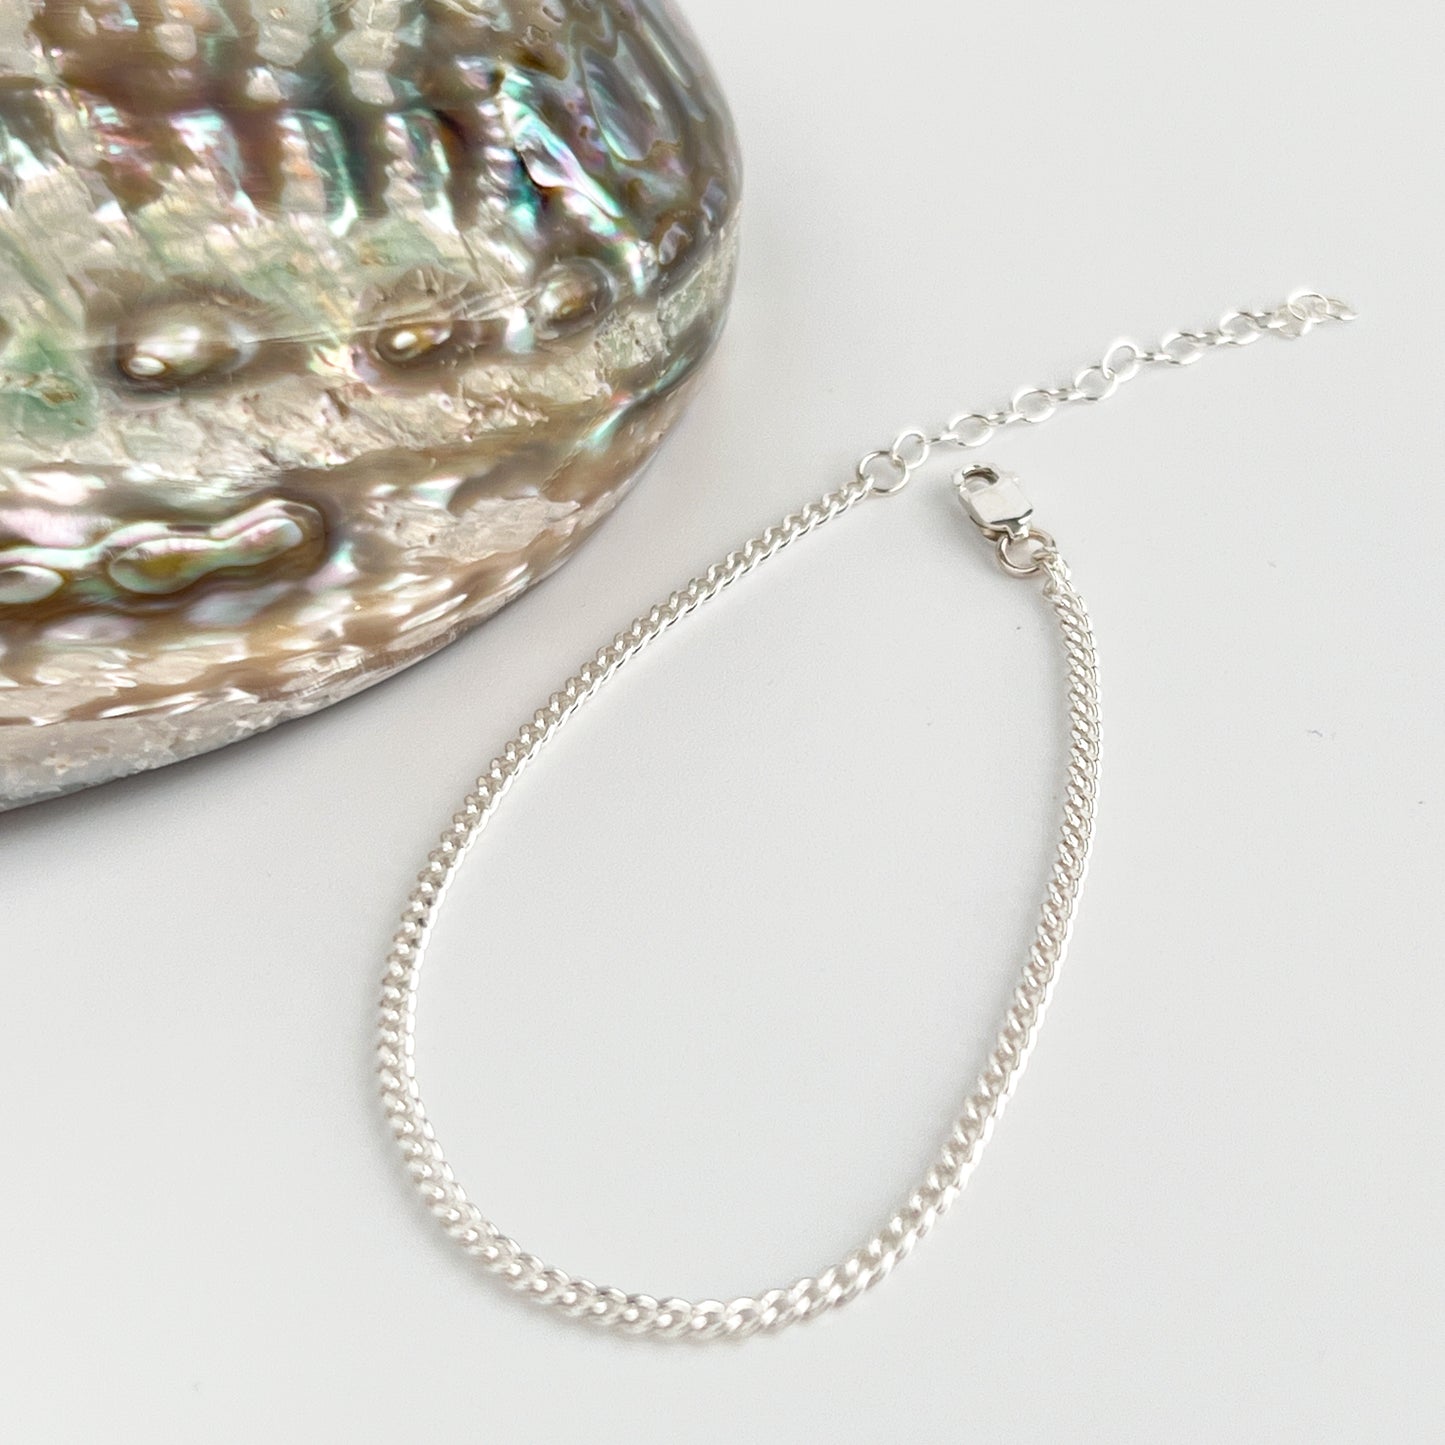 Sterling Silver Bracelets for Women - Curb Chain Bracelet - Adjustable